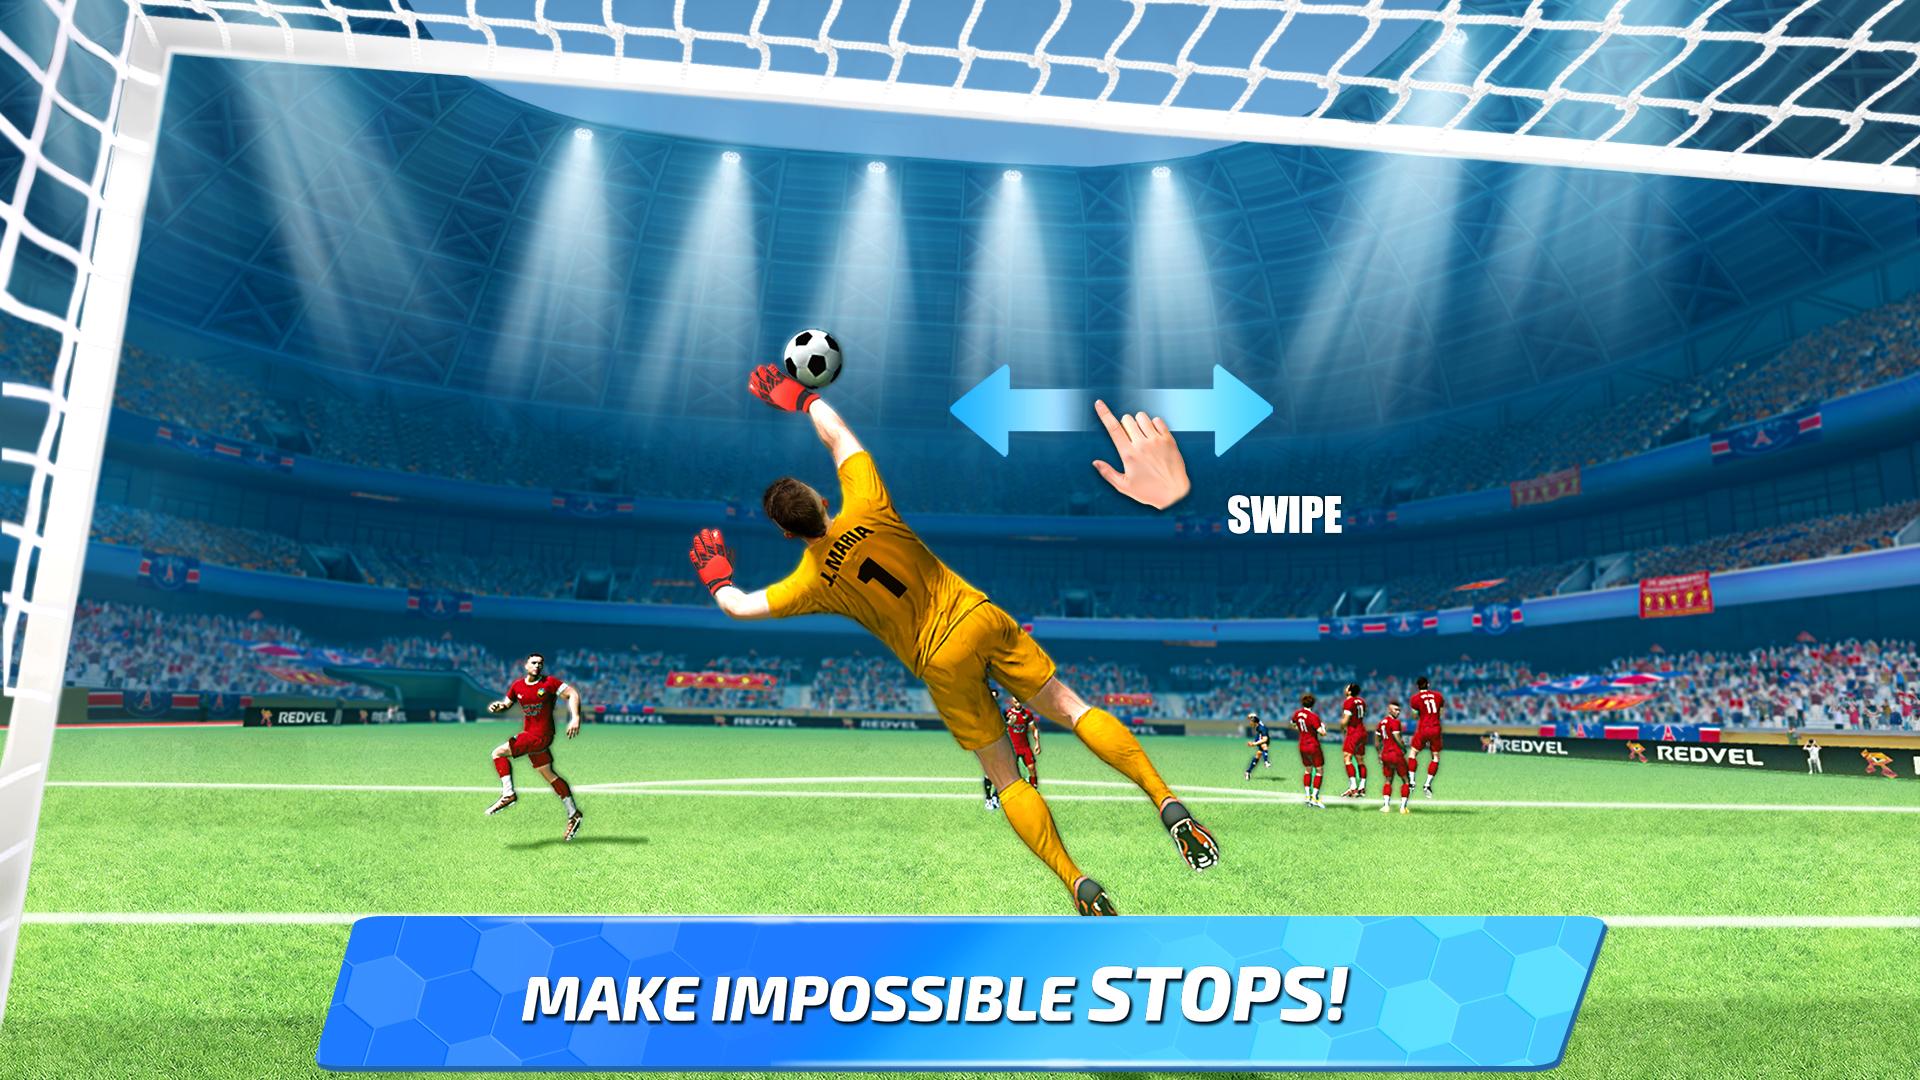 Soccer Star 2020 Football Cards: The soccer game 0.19.0 Screenshot 15